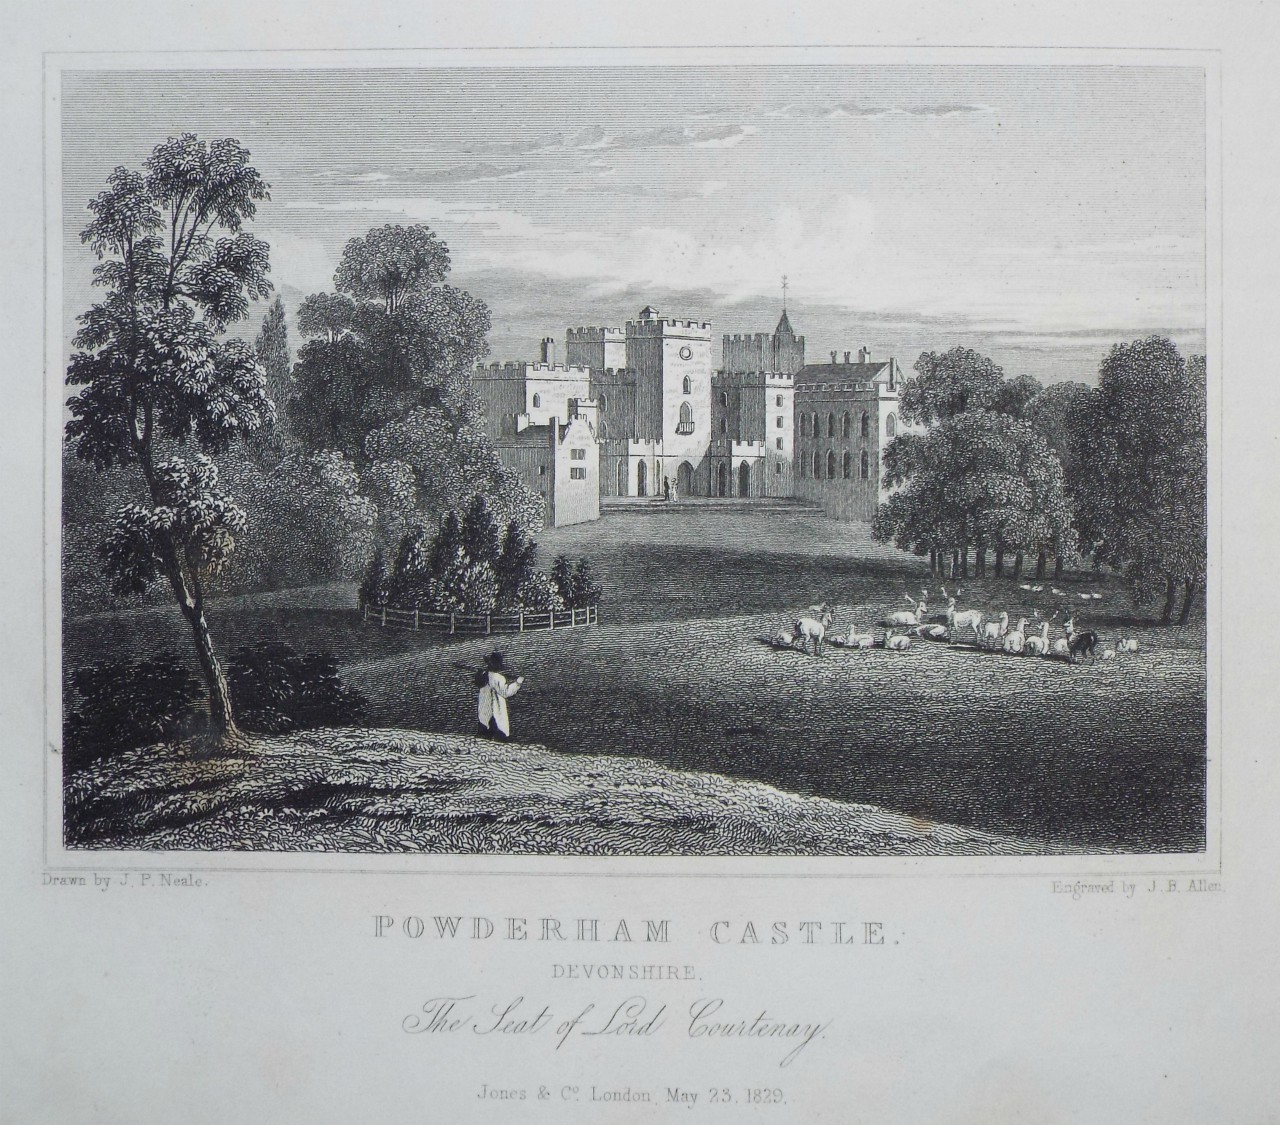 Print - Powderham Castle. Devonshire. The Seat of Lord Courtenay. - Allen